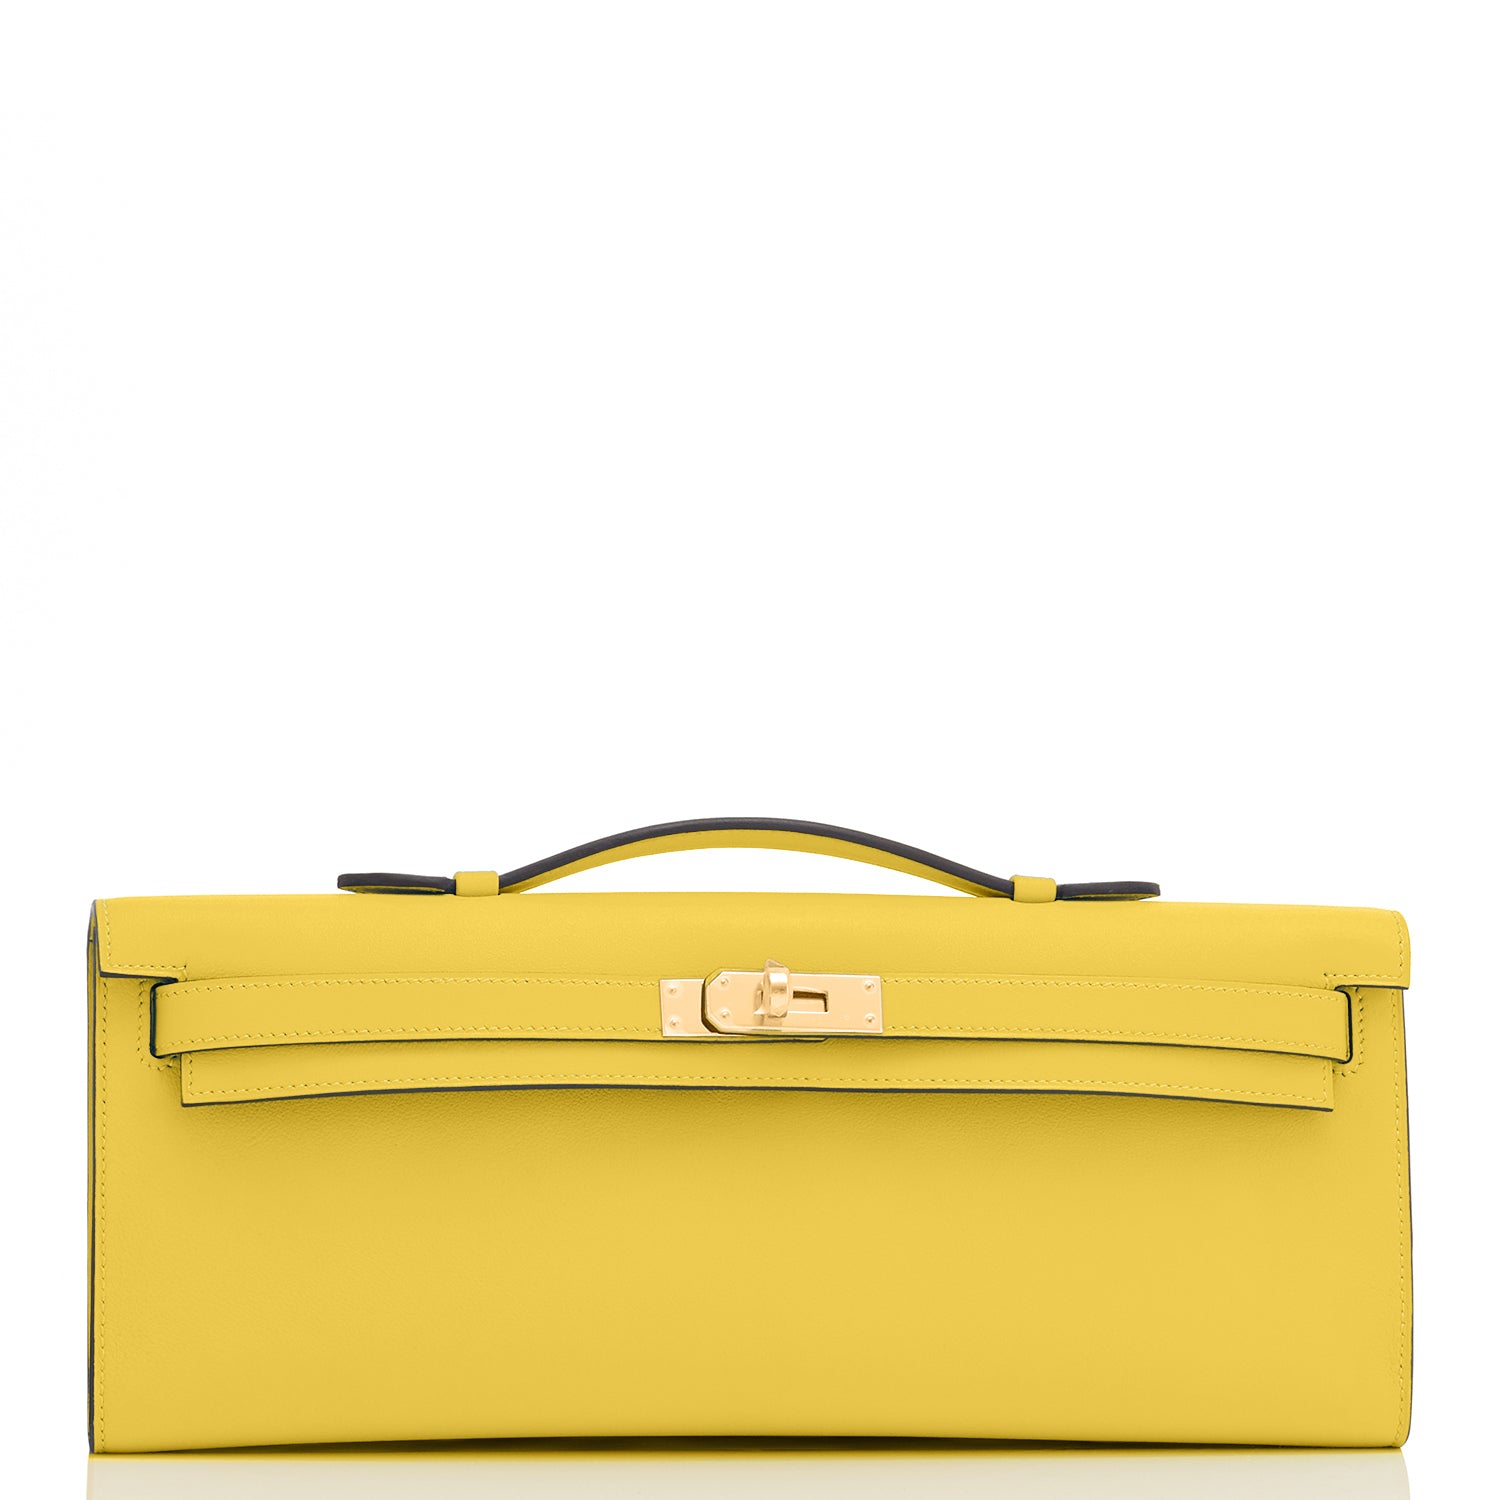 Hermes Kelly Handbag Lime Swift with Palladium Hardware 25 Yellow